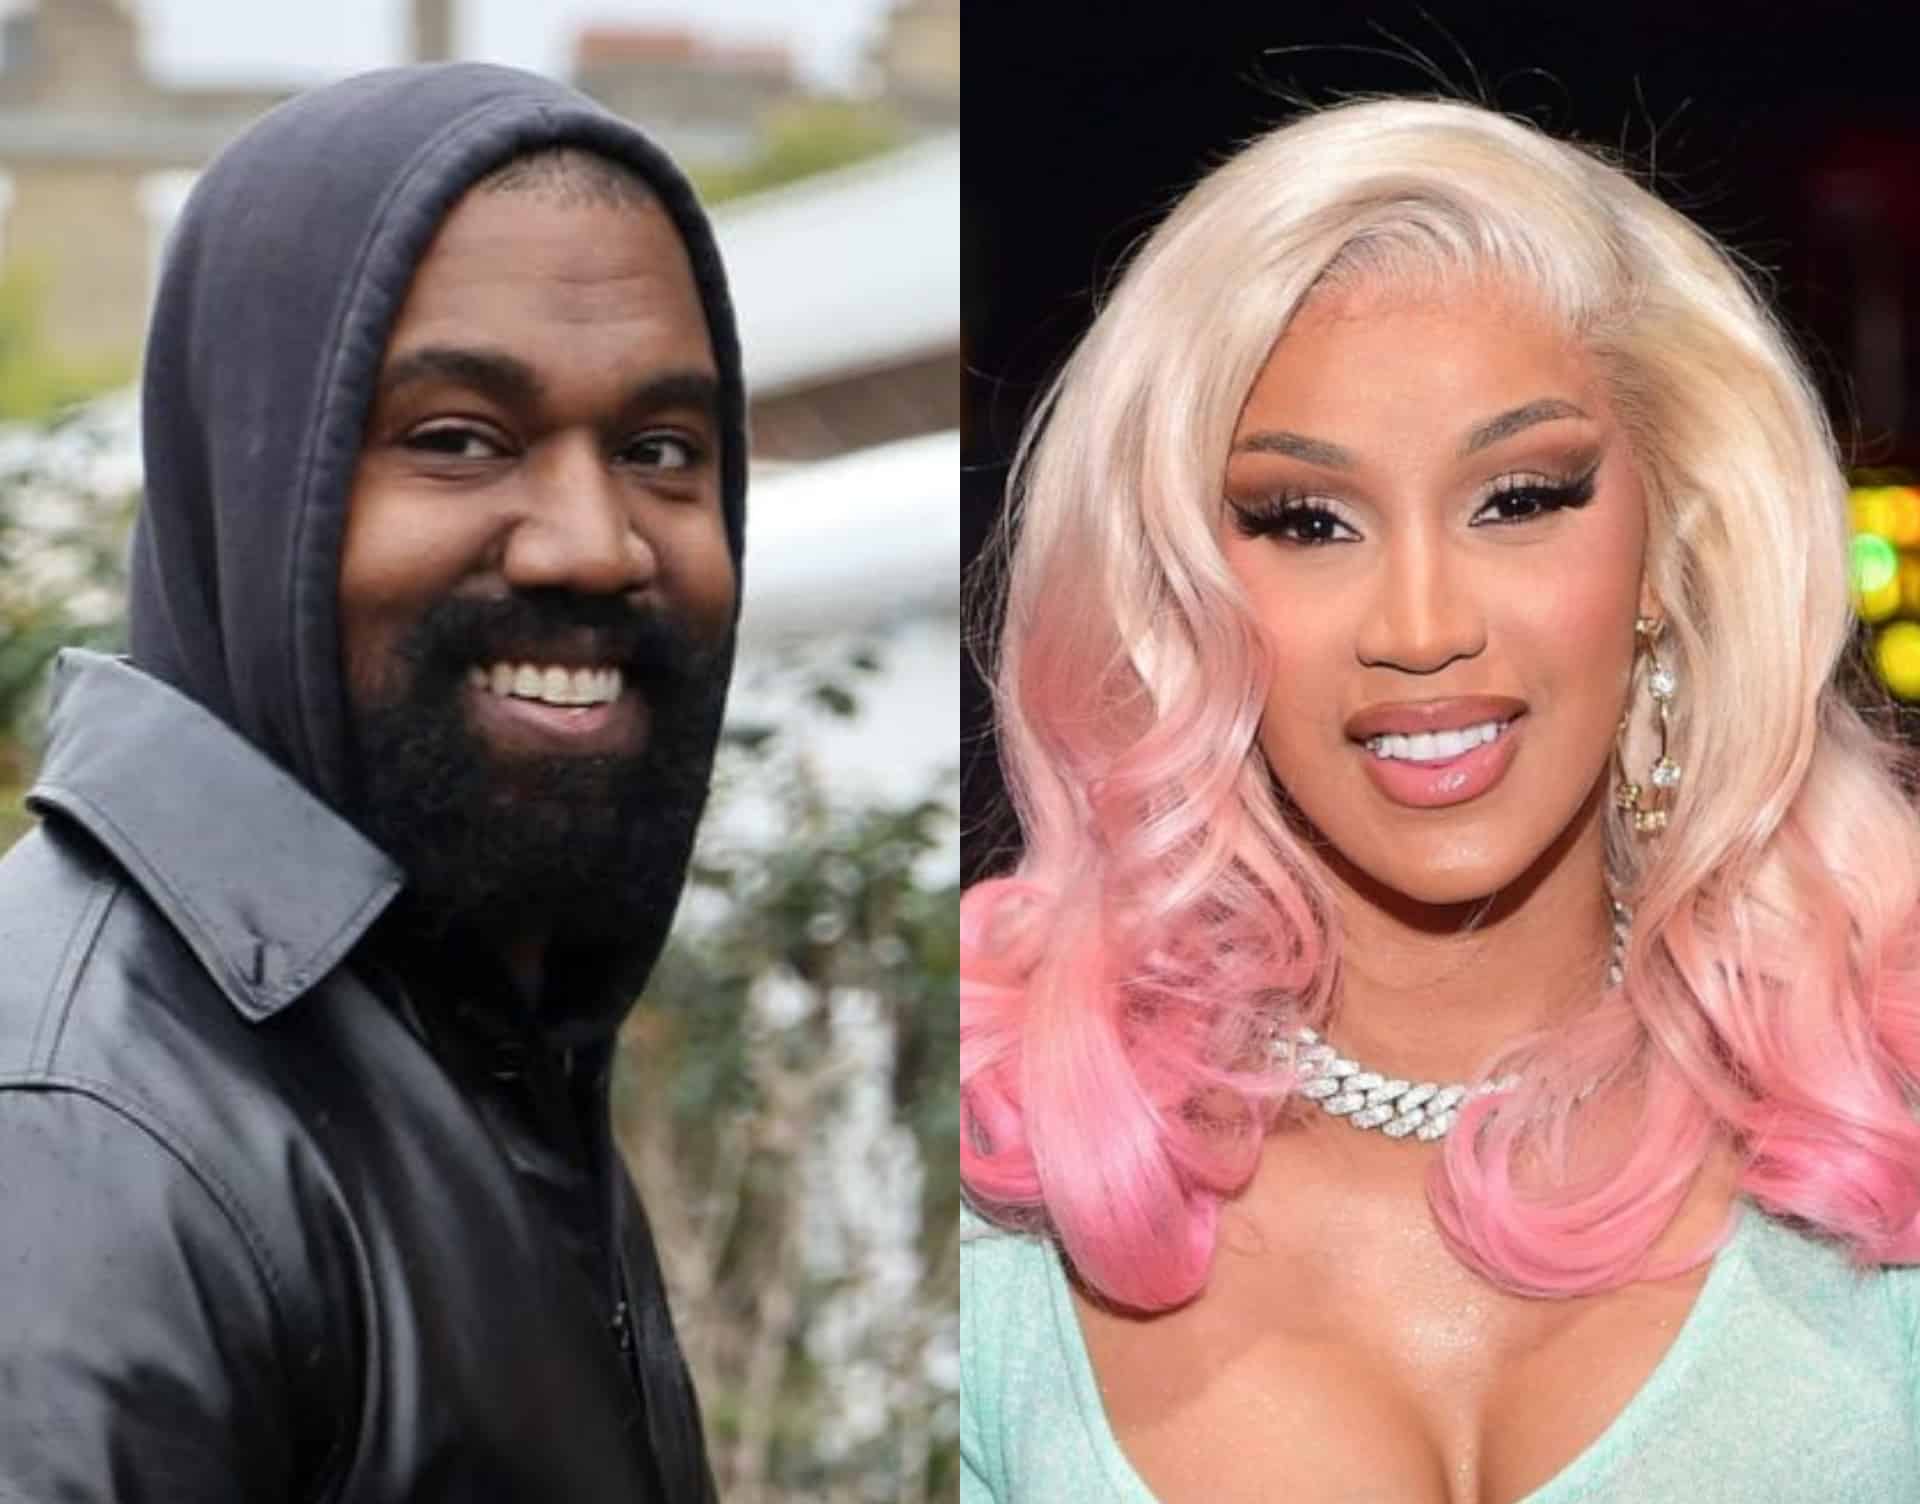 Cardi B Responds To Kanye West Calling Her An "Illuminati Plant"